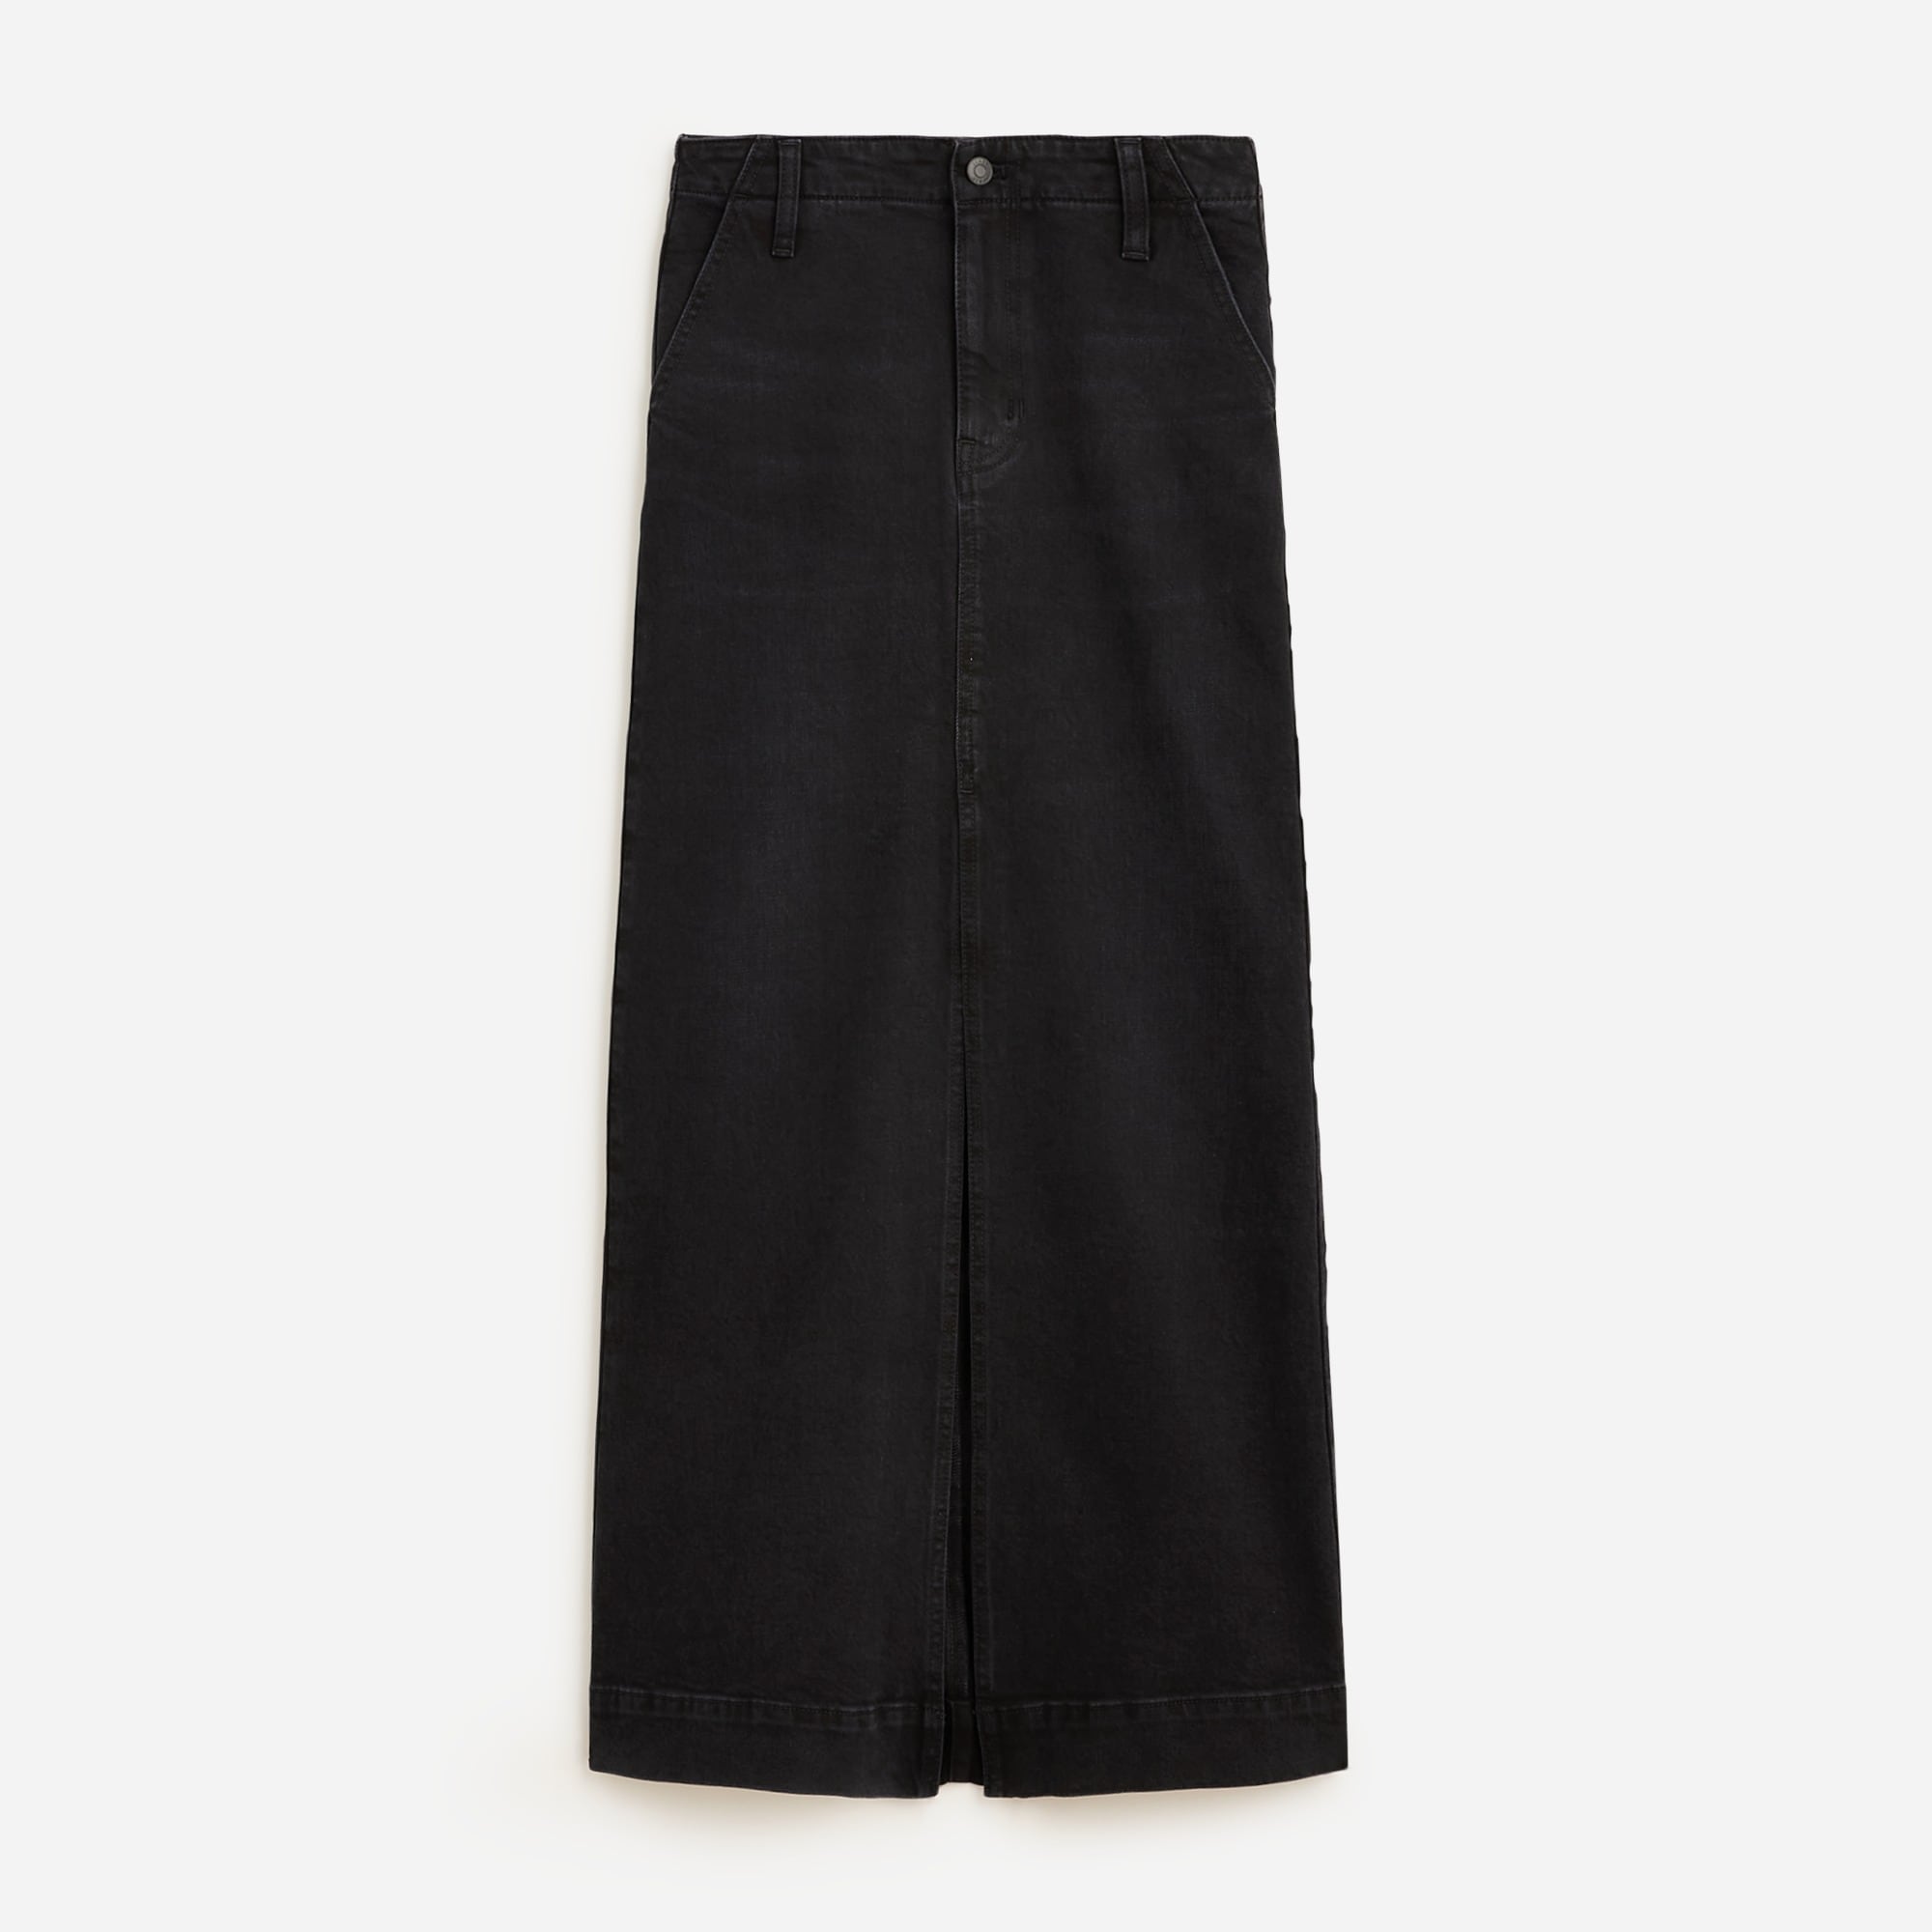  Denim maxi skirt in washed black